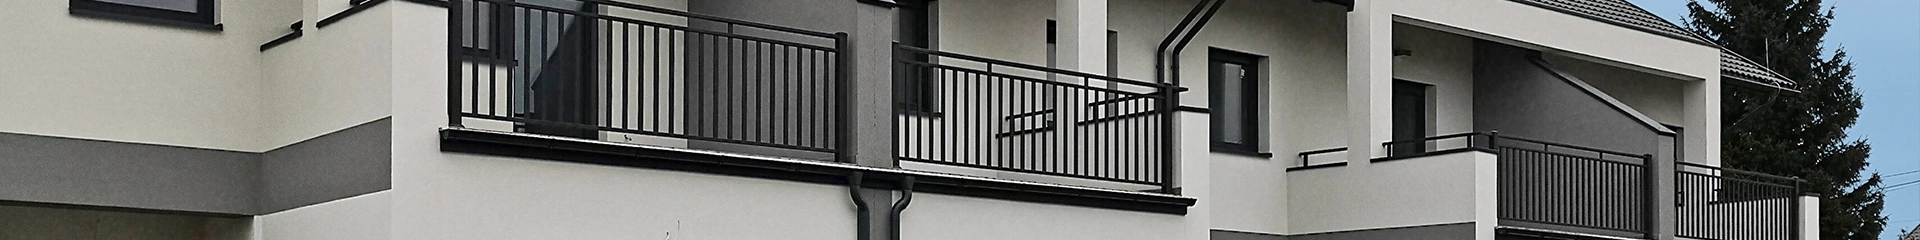 balustrada na balkonie